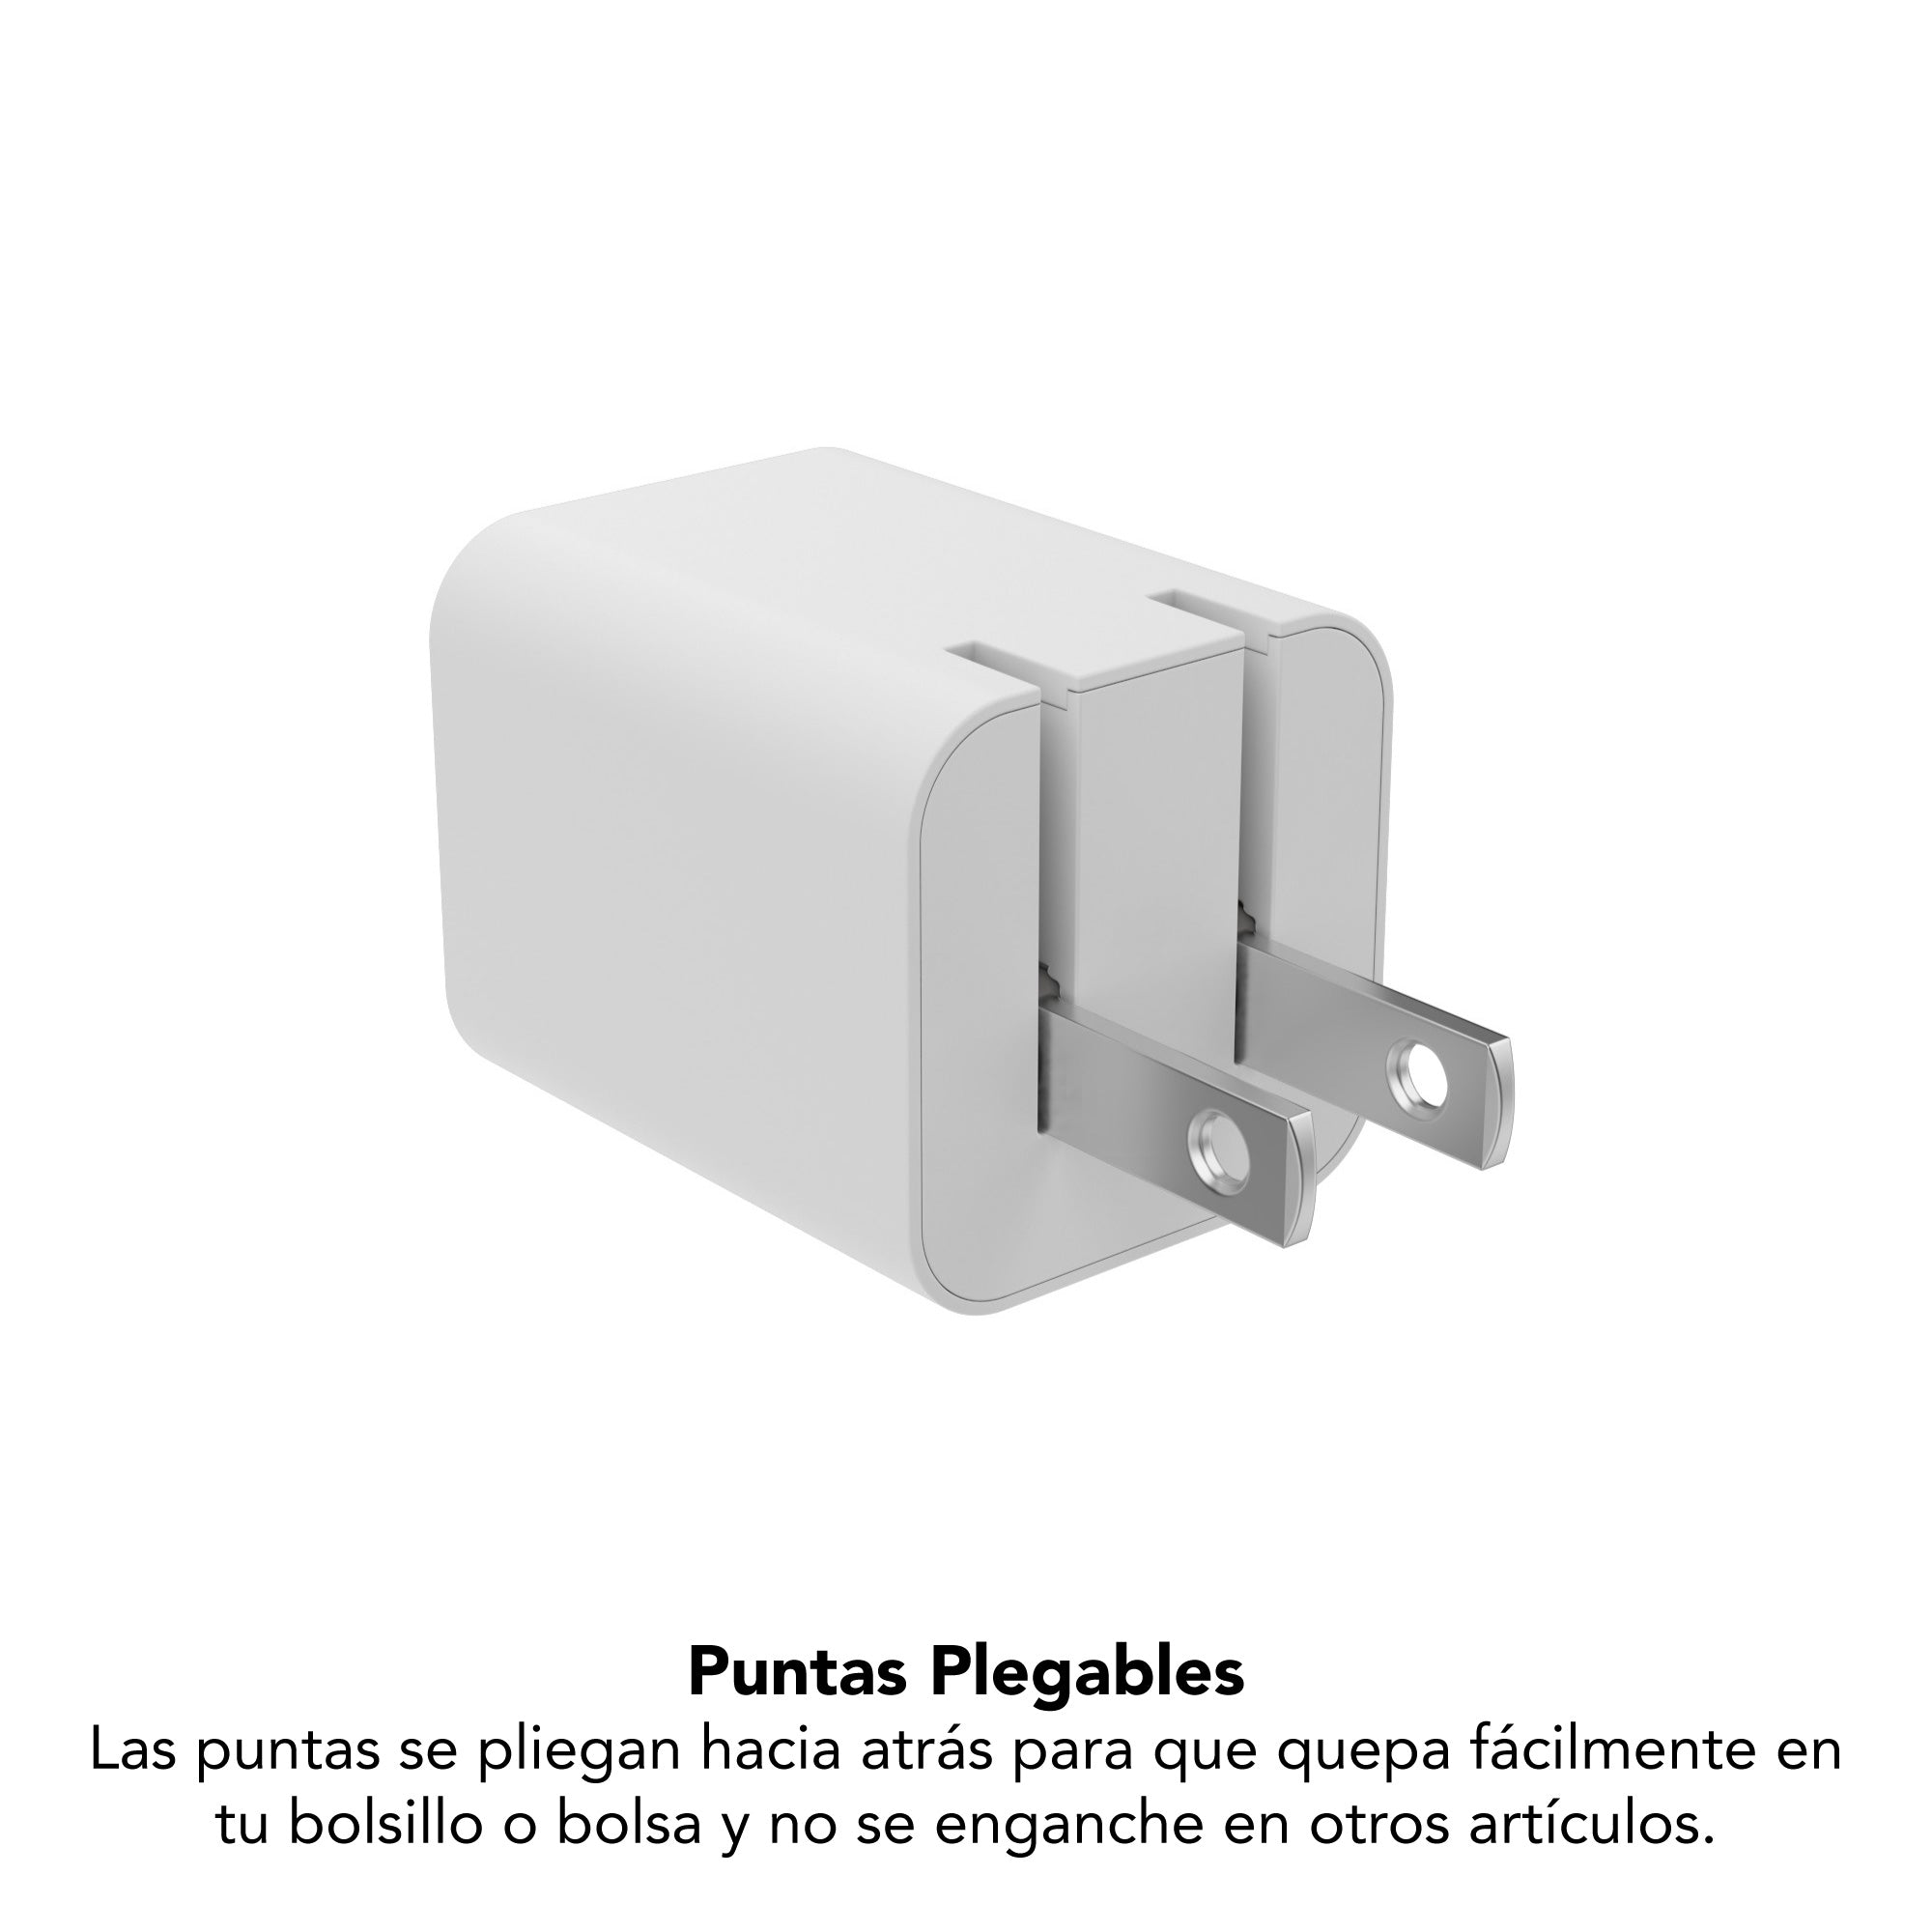 Cargador de pared Apple 30W USB-C Power Adapter - Blanco